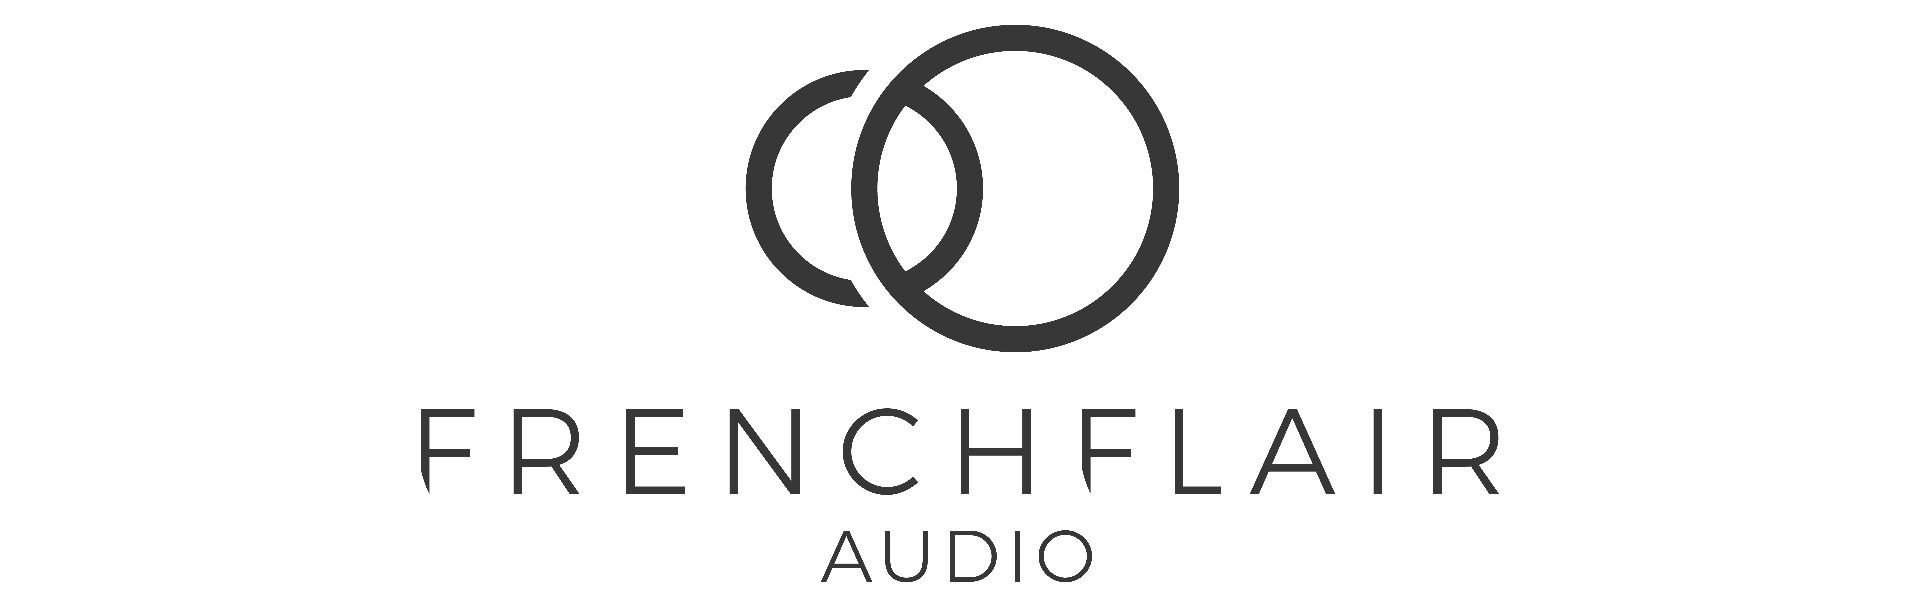 FrenchFlairAudio-gris4